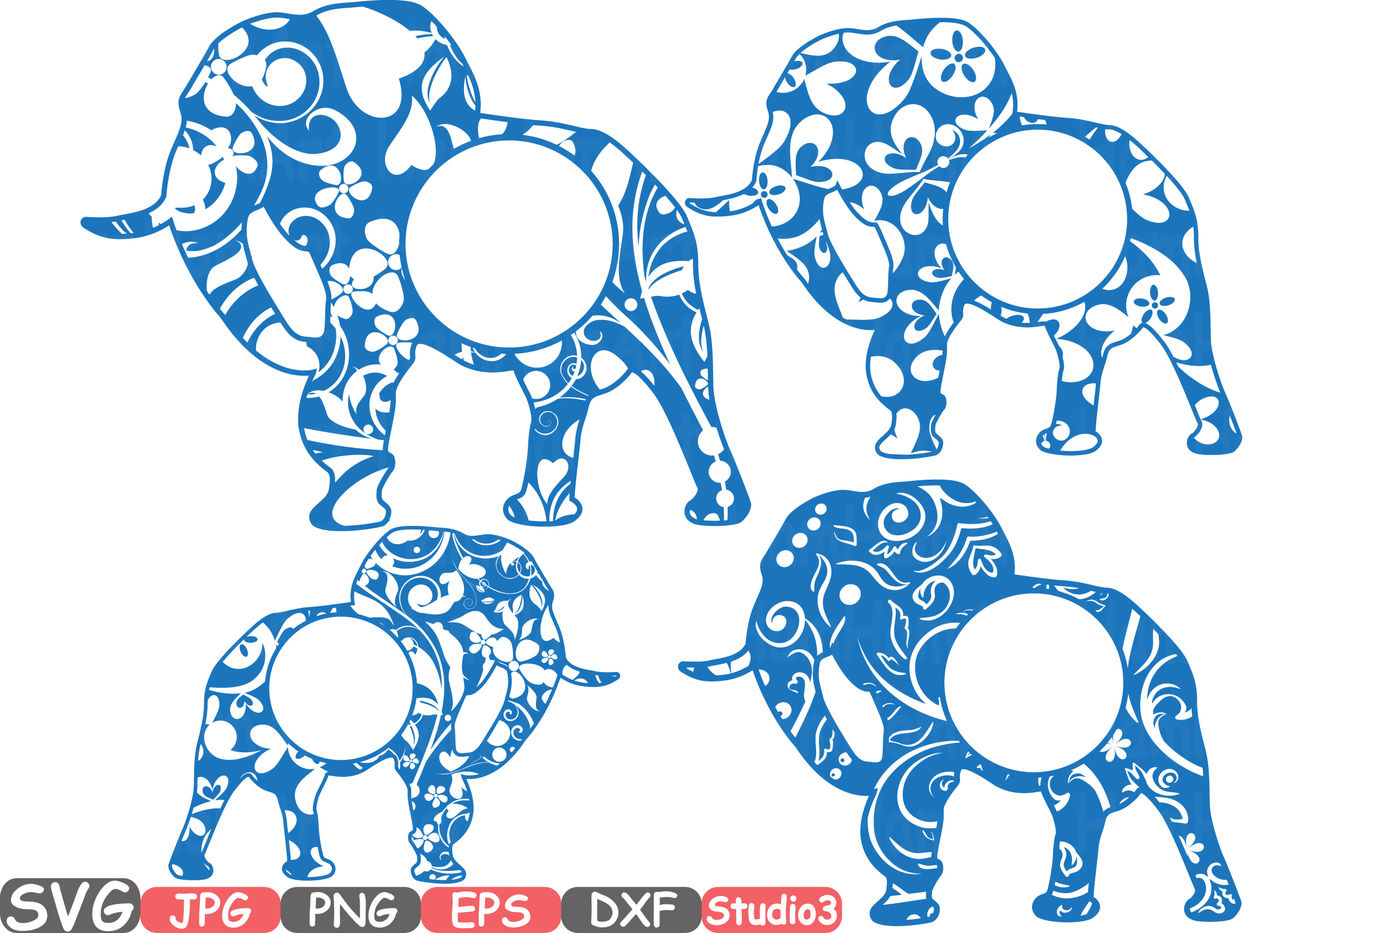 Download Elephant Circle Mascot Frames Jungle Animal Safari Flower Monogram Cutting Files Svg Silhouette Cricut Design Studio3 Cameo Dxf Jpg Zoo 371s By Hamhamart Thehungryjpeg Com